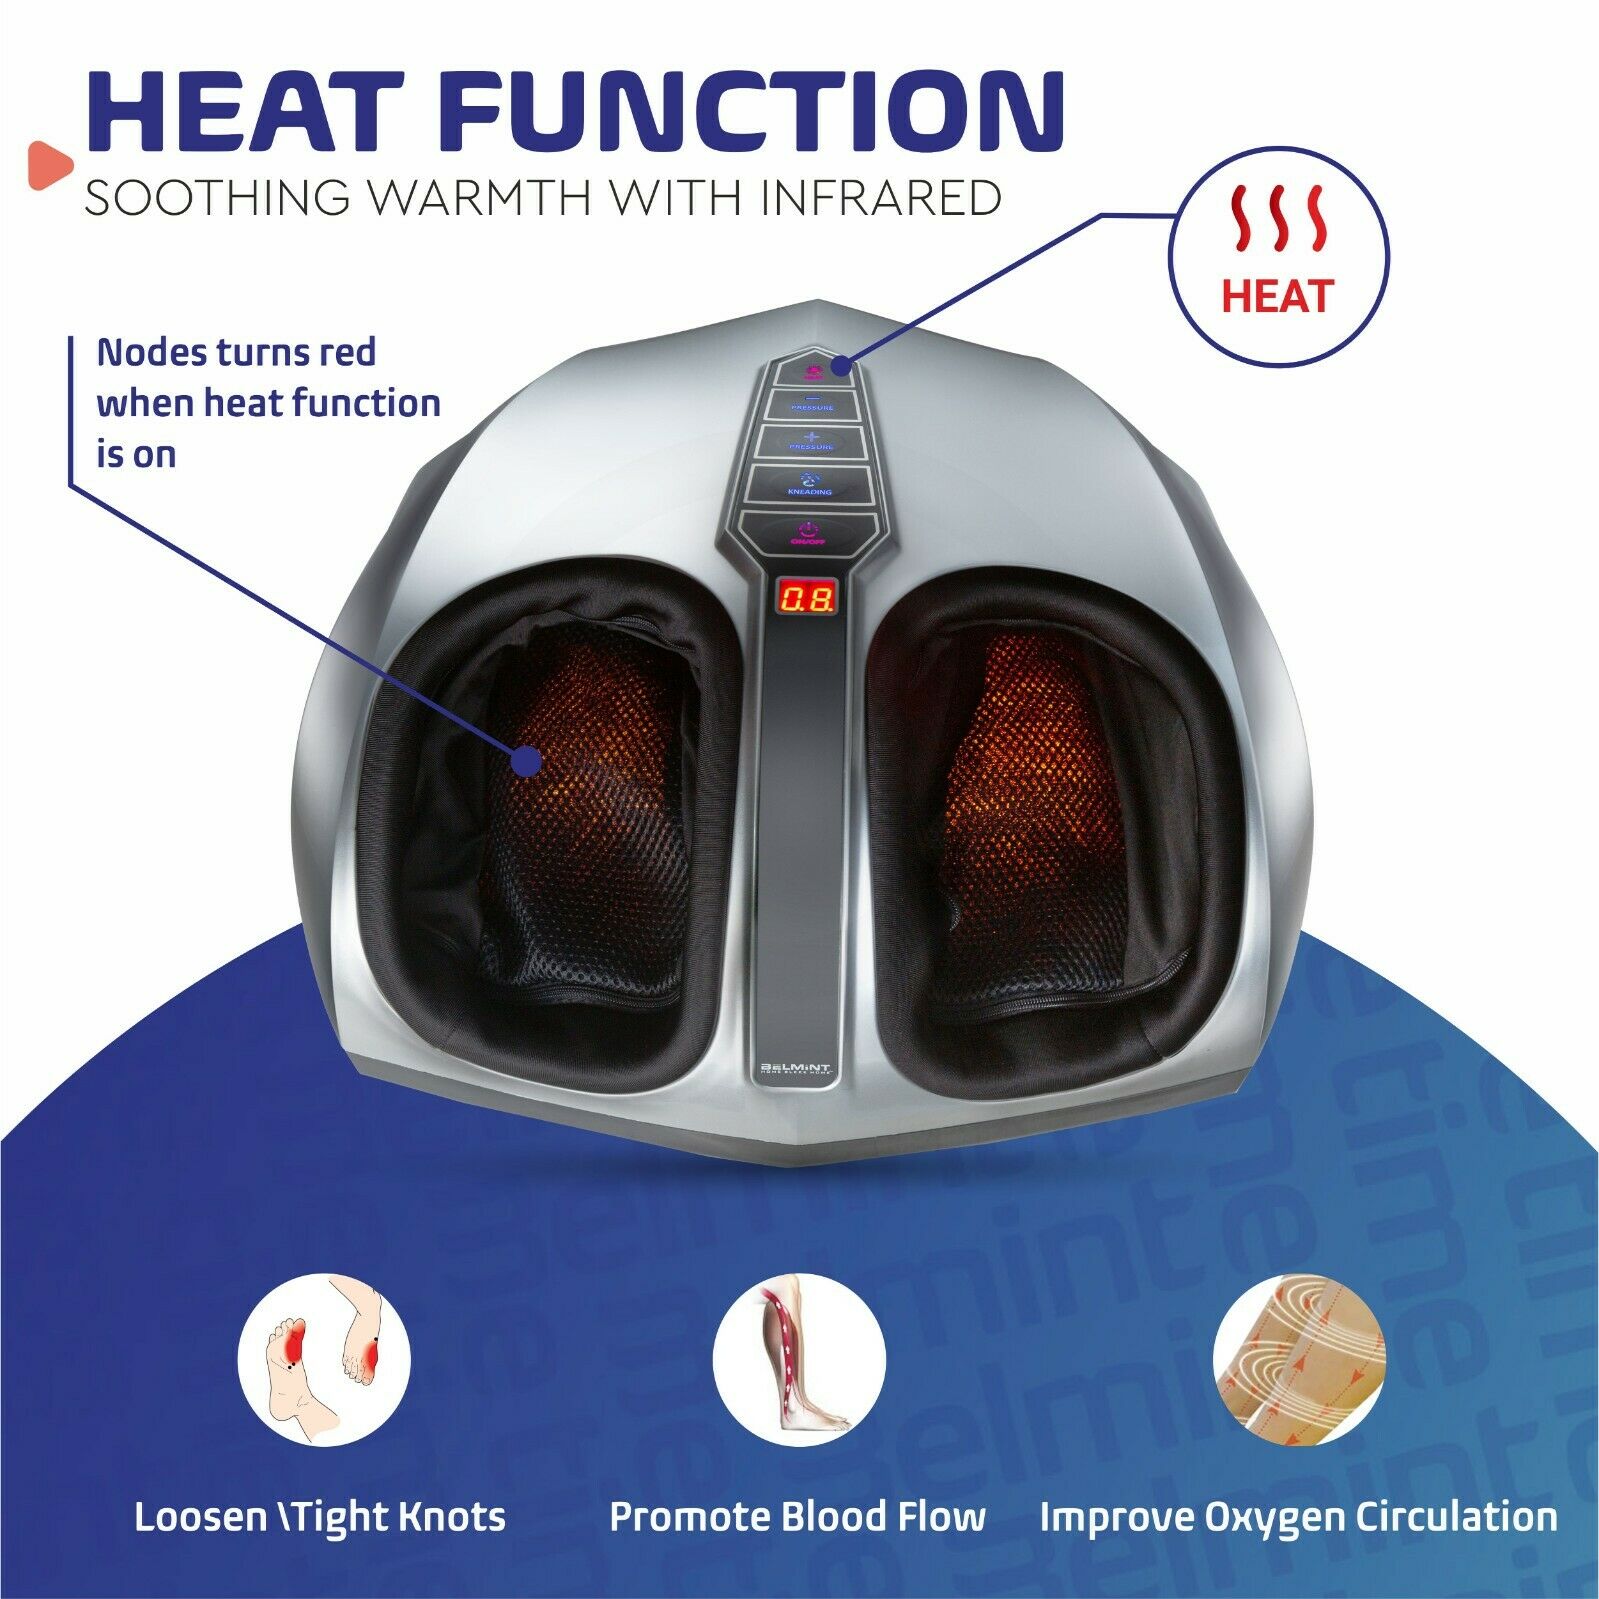 Belmint Shiatsu Foot Massager with Heat Therapy, Deep Kneading & Air Massage-New